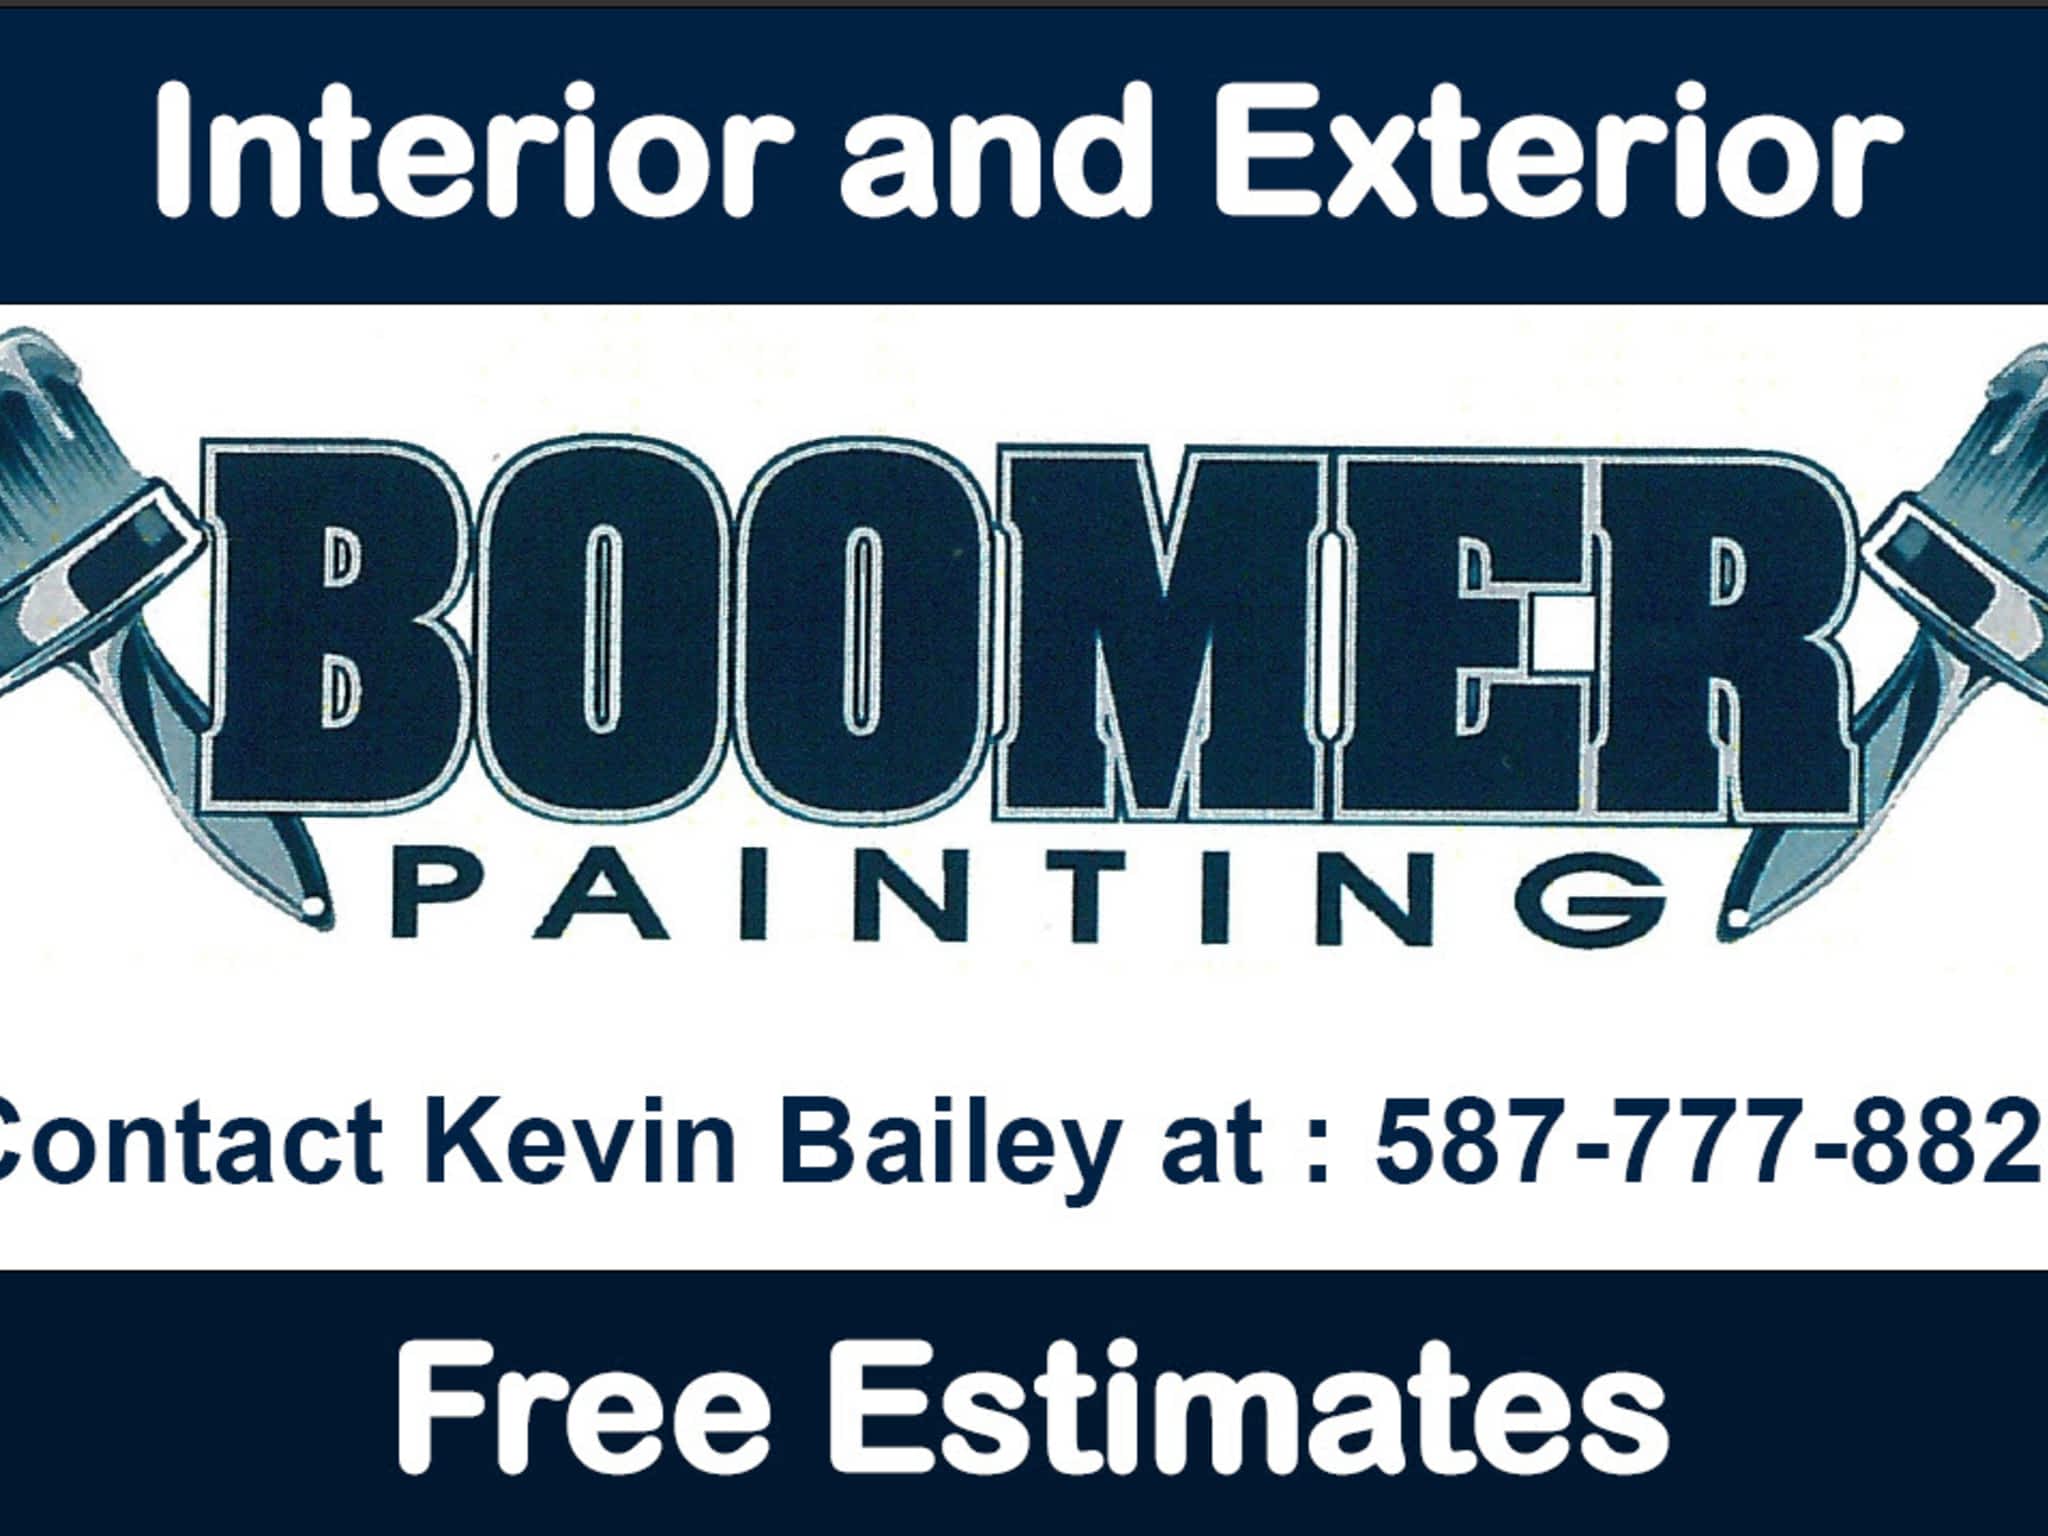 photo Boomer Painting Ltd